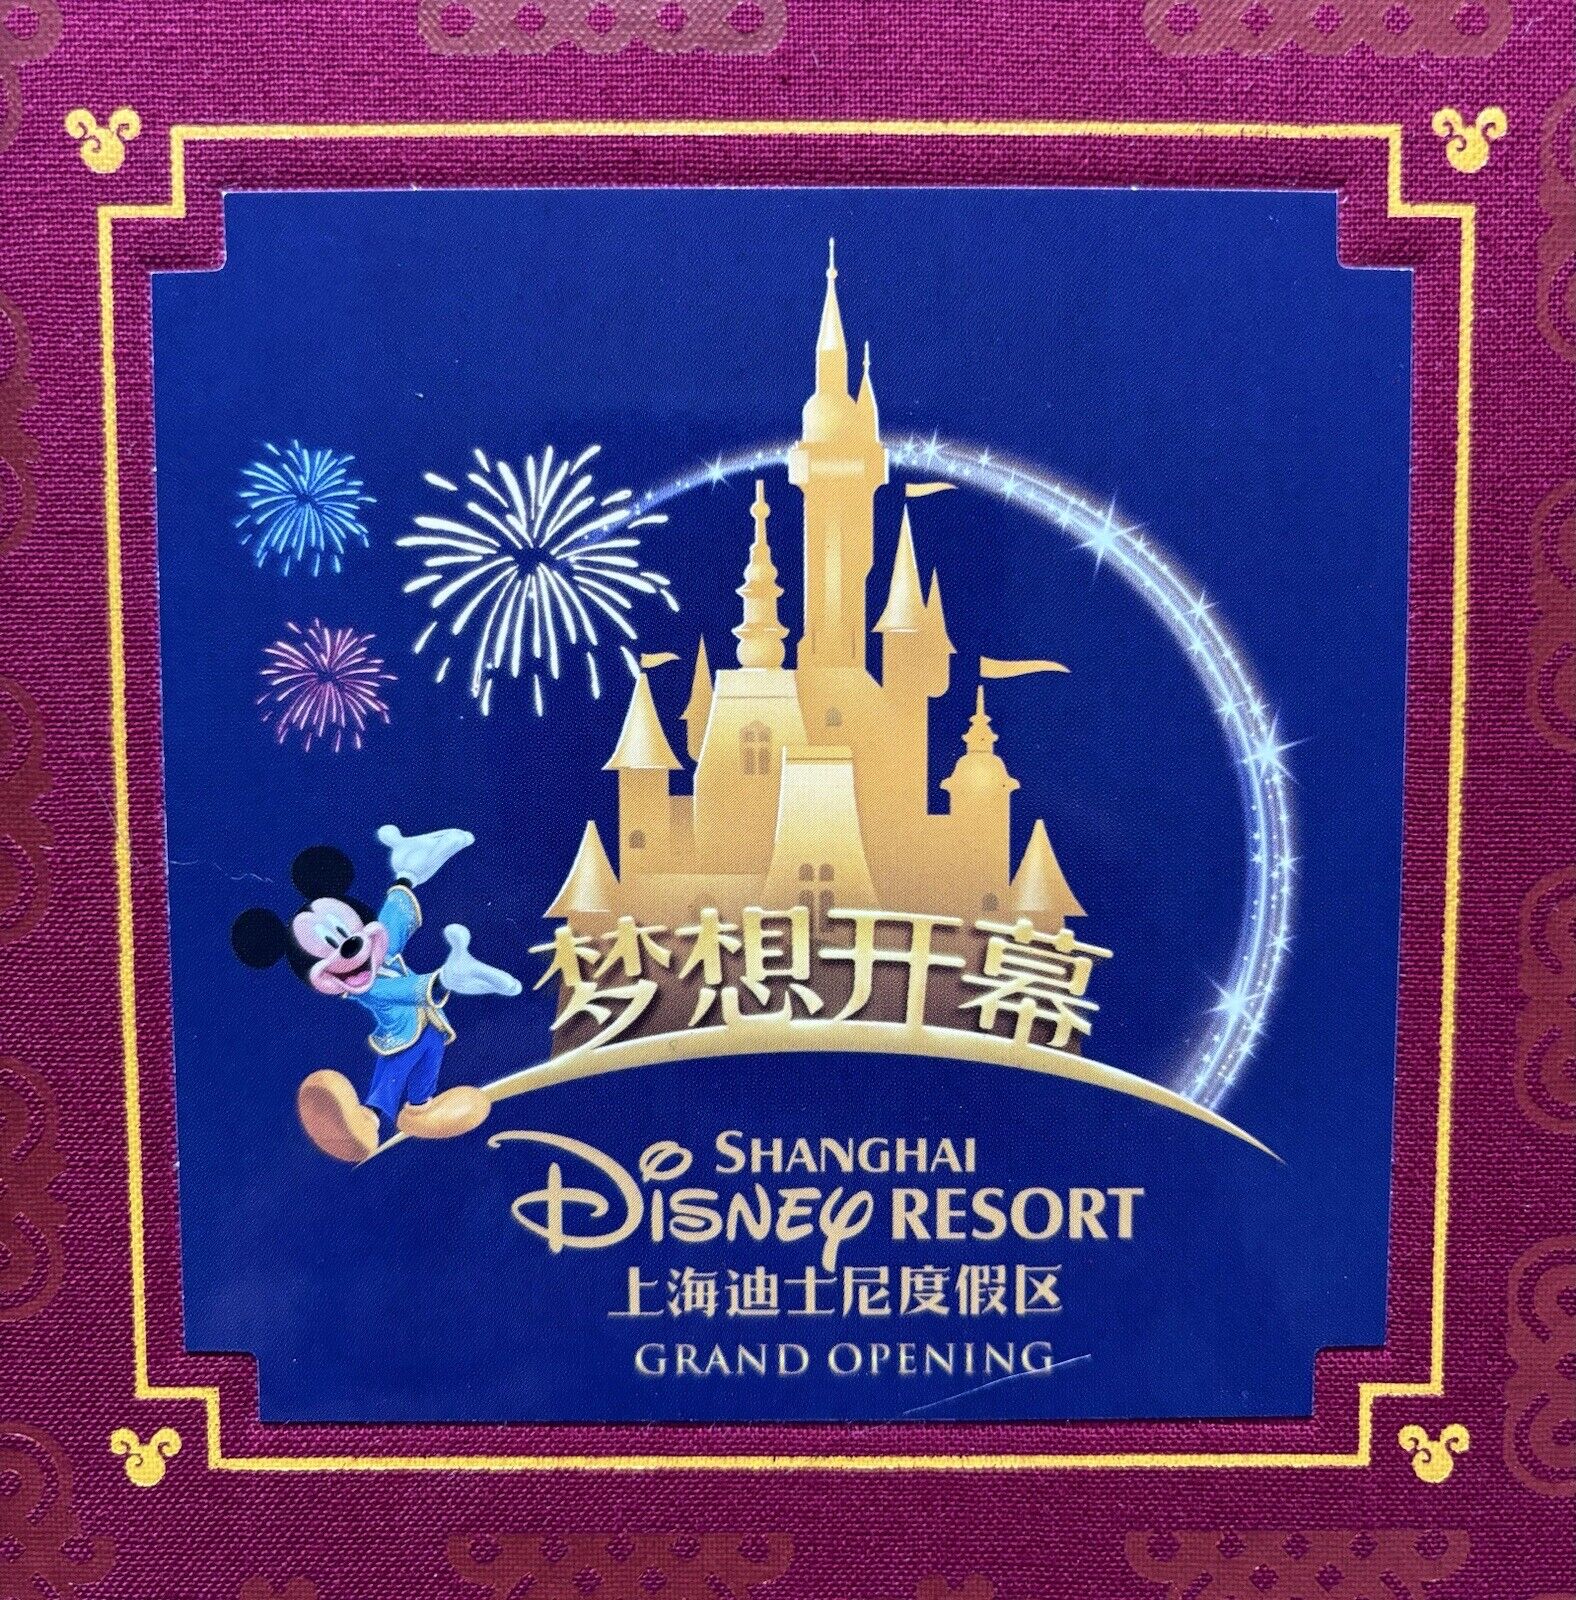 RARE Shanghai Disney Resort Grand Opening Promo Book  - 2016 Exclusive Giveaway